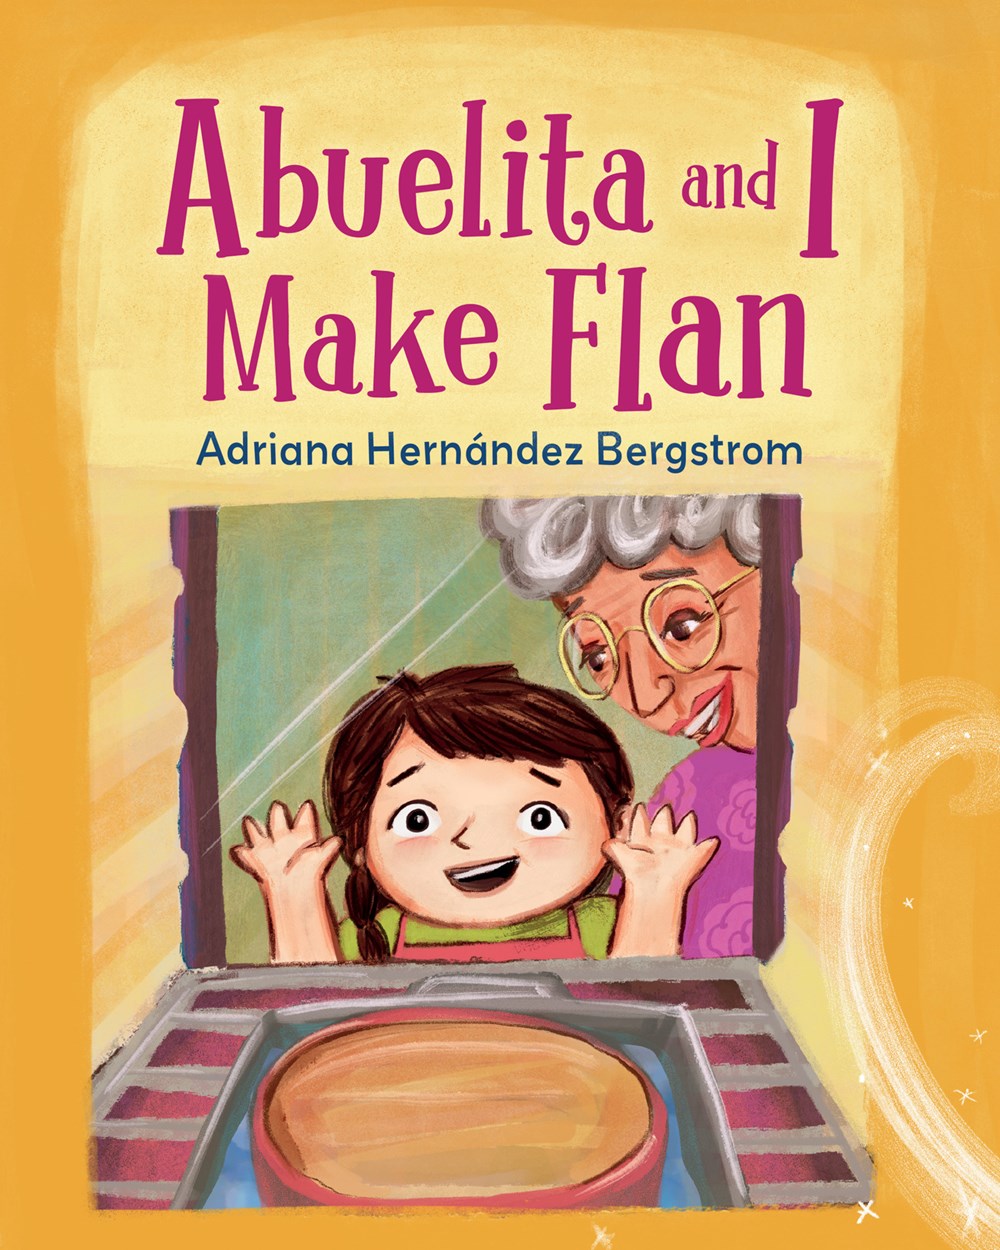 Abuelita and I Make Flan by Adriana Hernández Bergstrom (Hardcover)